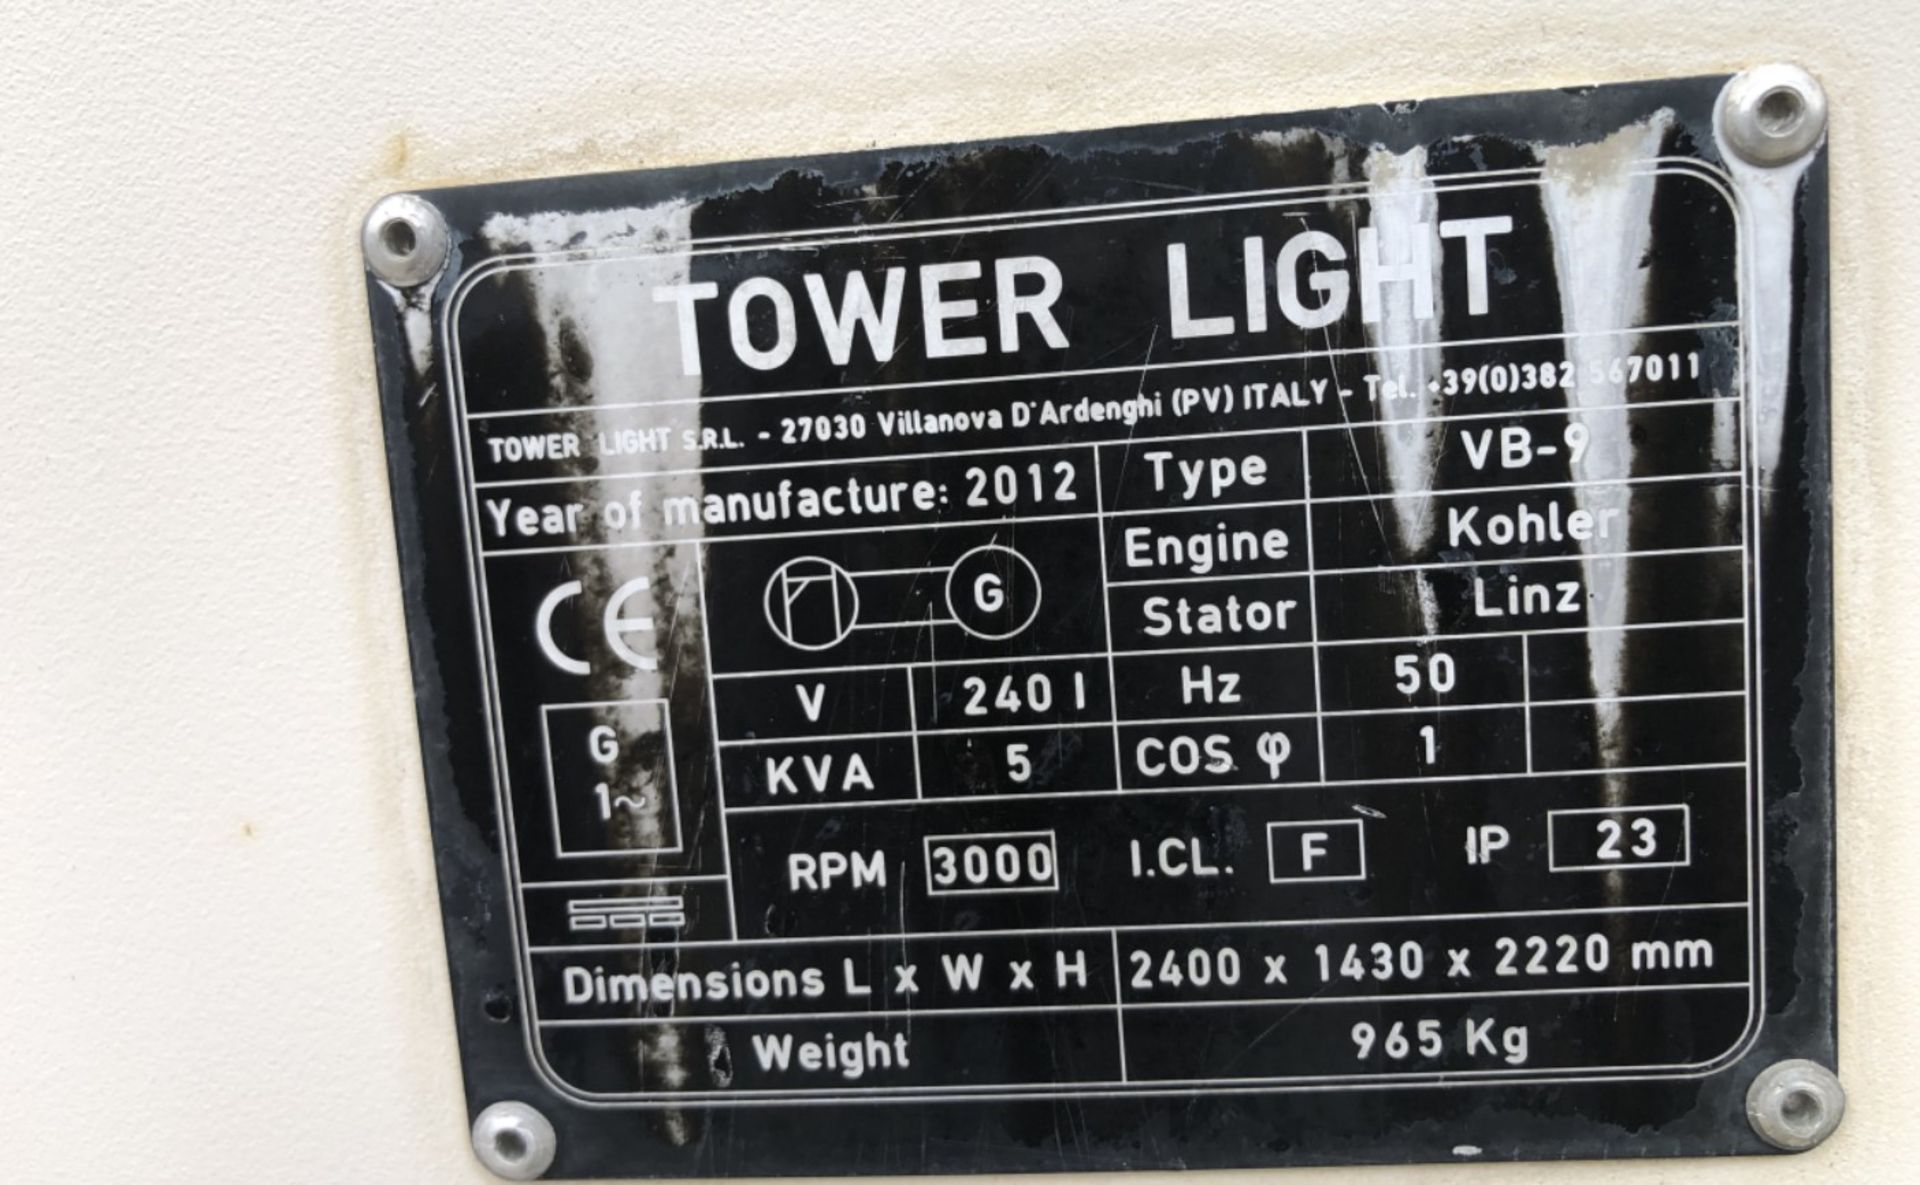 VB9 DIESEL TOWER LIGHT TRAILOR MOUNTED - Image 6 of 7